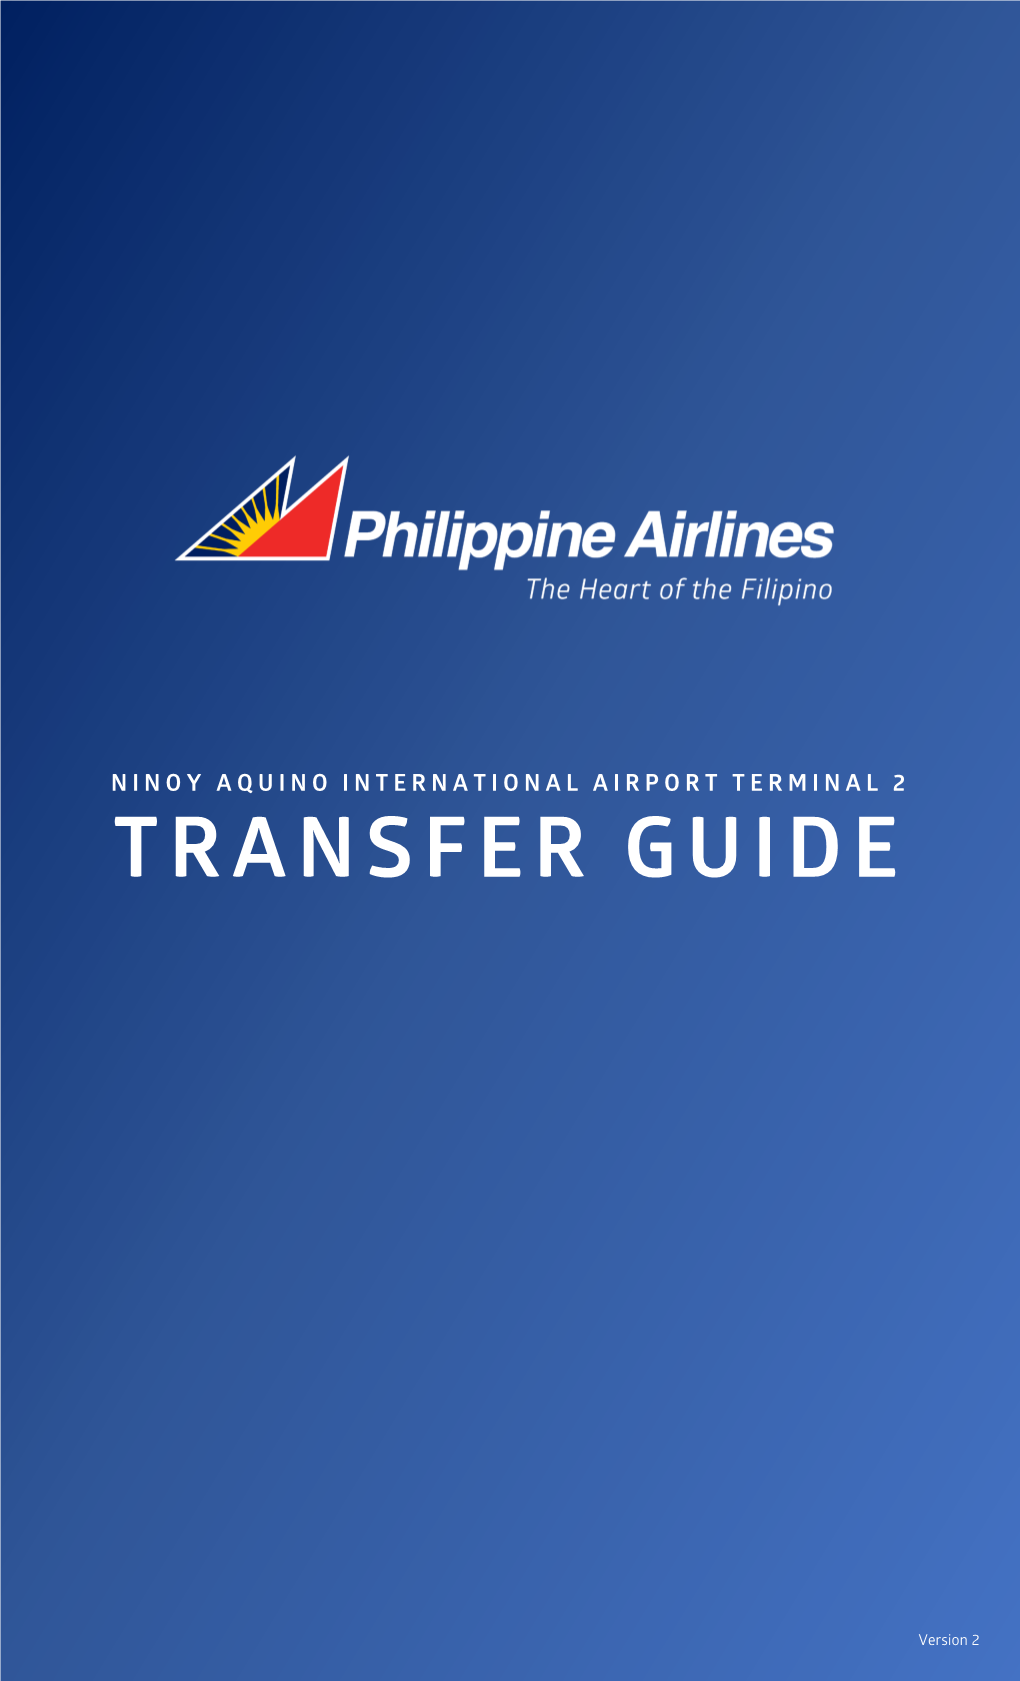 NAIA Terminal 2 Transfer Guide